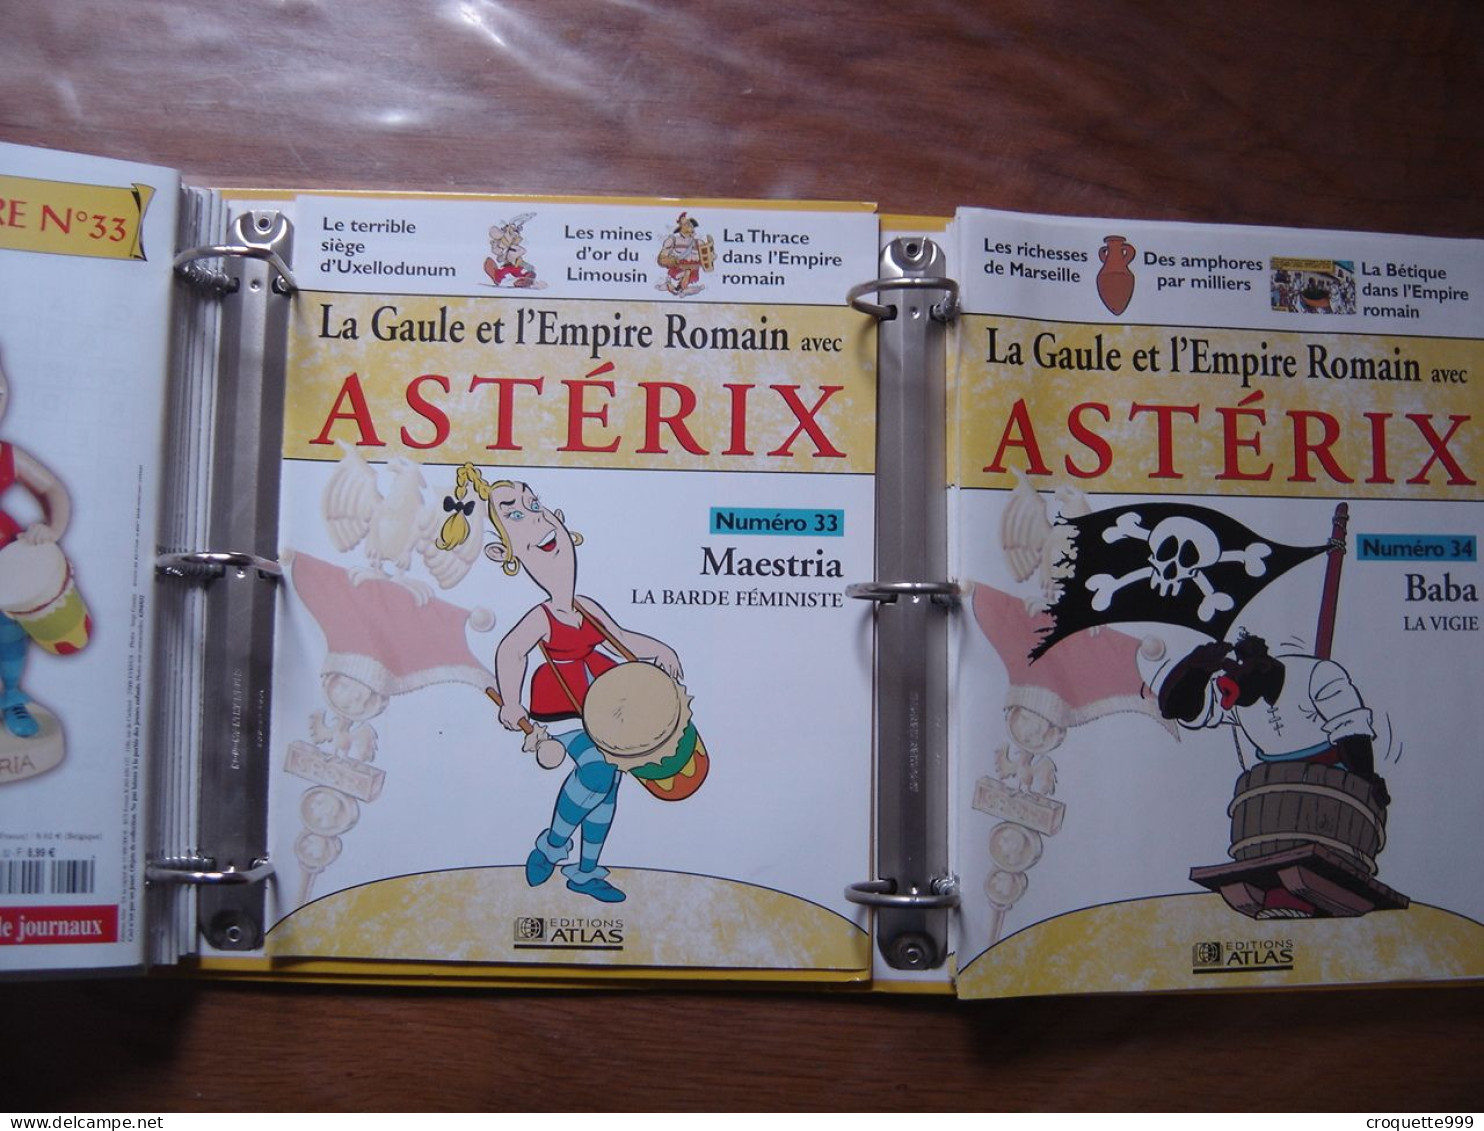 La Gaule et l'empire romain avec ASTERIX Editions Atlas 56 numeros manque 14 numeros